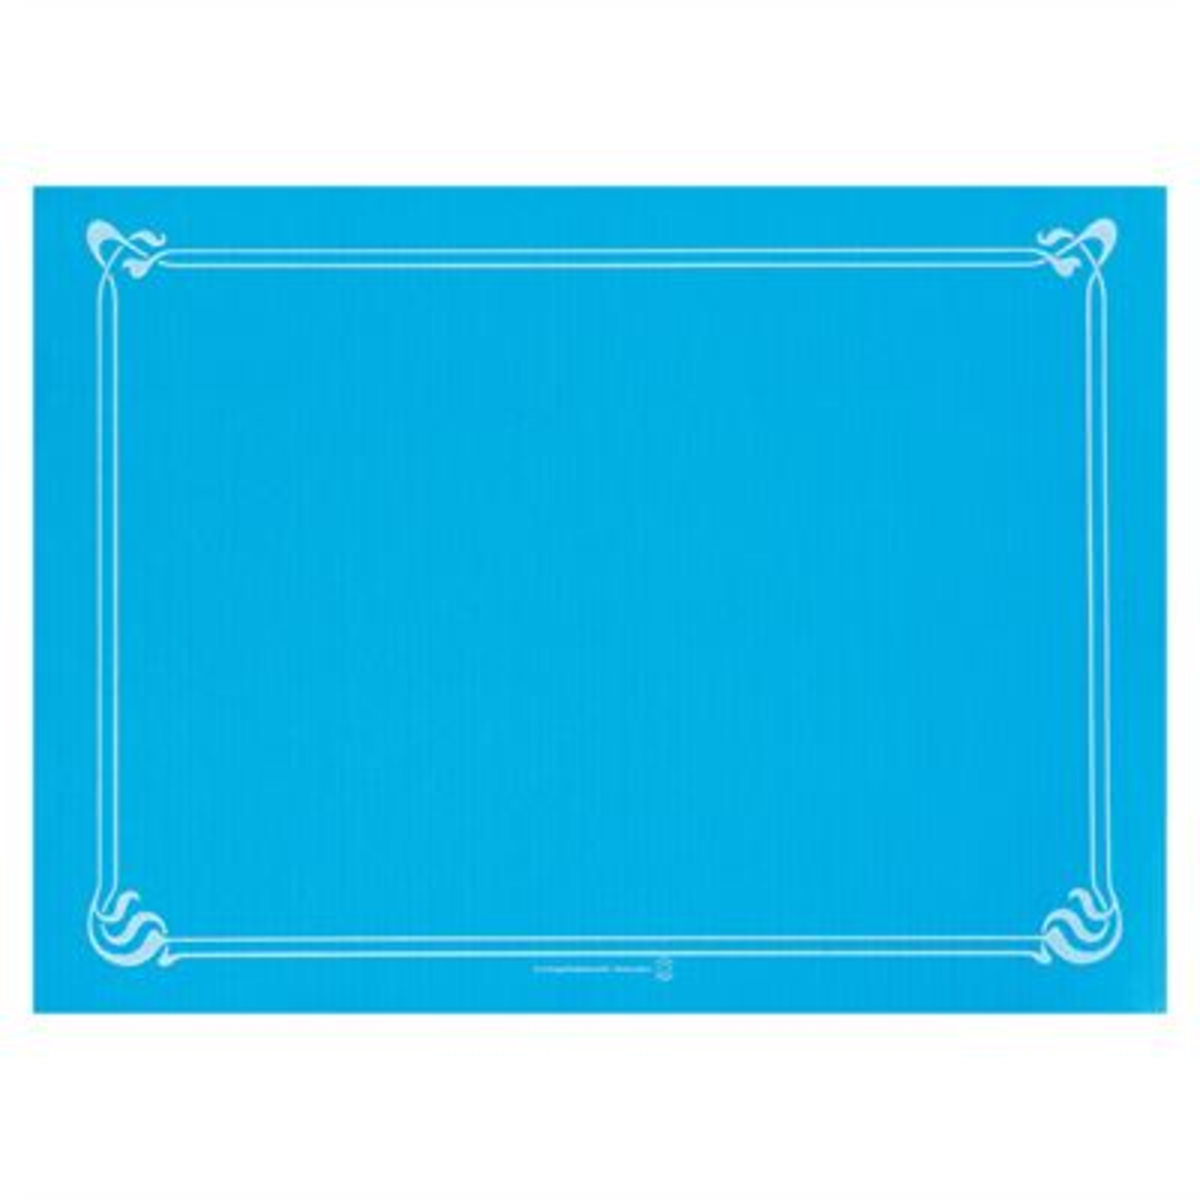 Set de table 31x43 cm bleu turquoise x 2000 Garcia de Pou - 132.31